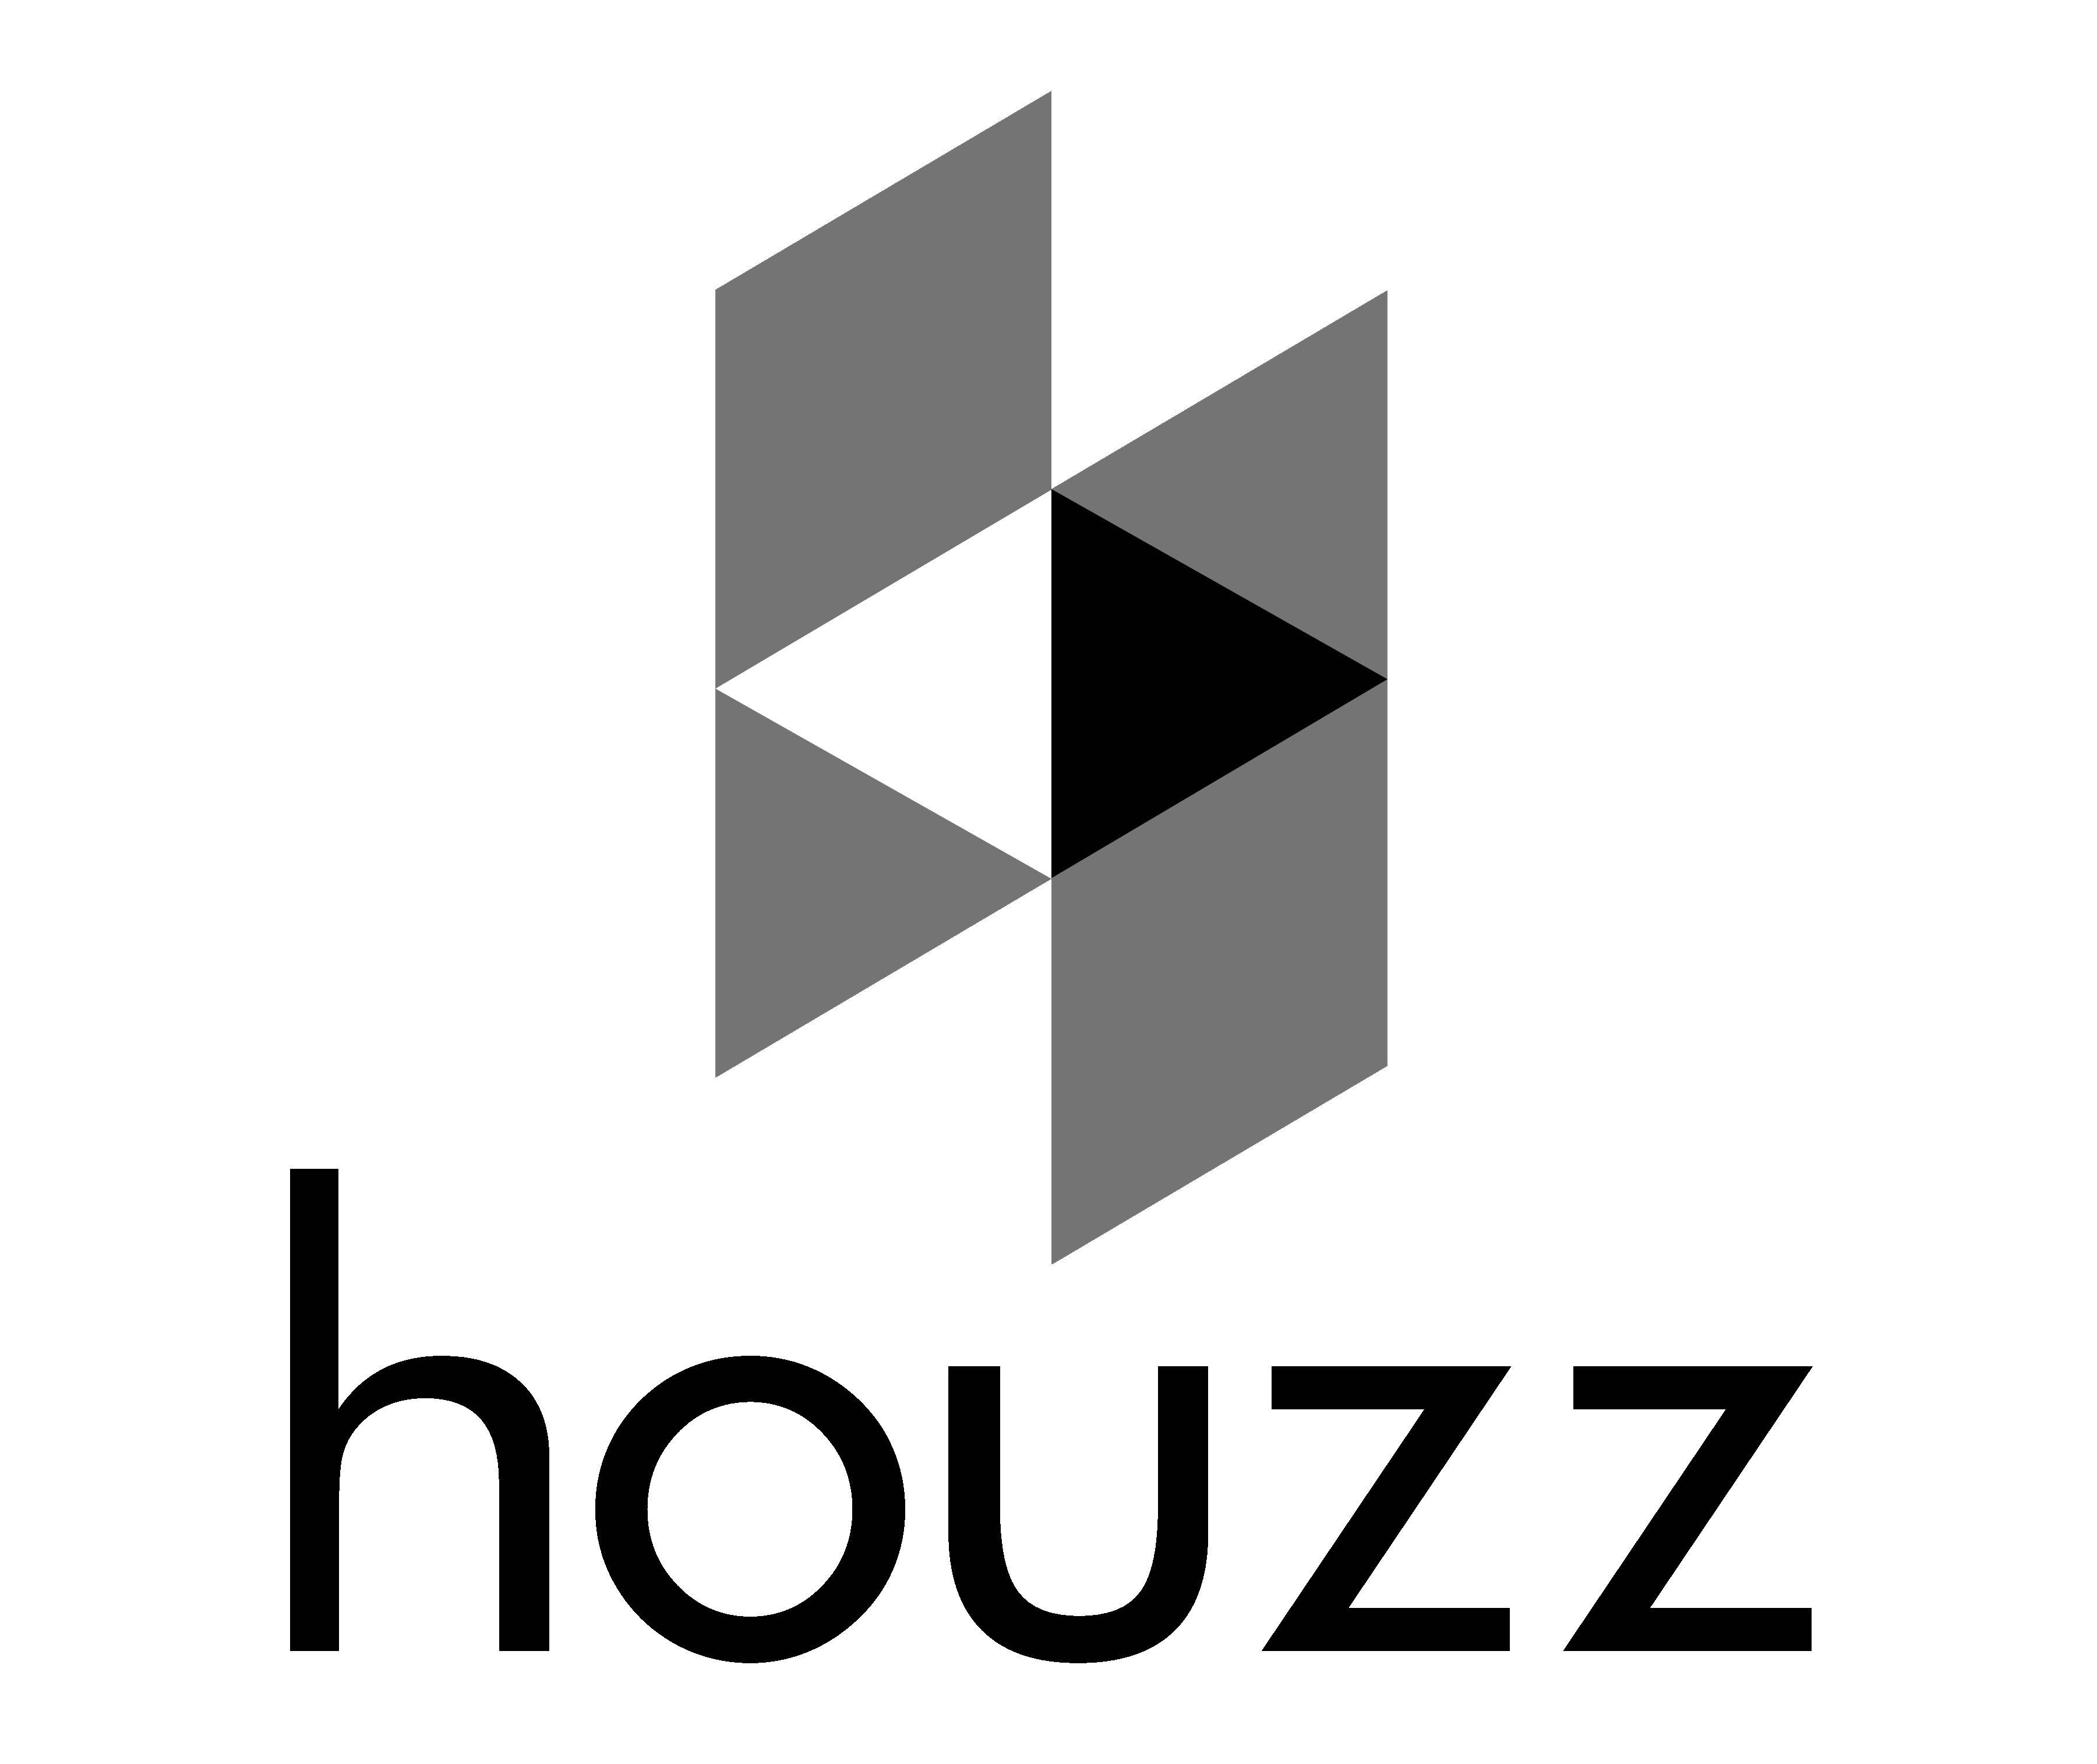 Houzz New Logo - Houzz Logo, Houzz Symbol, Meaning, History and Evolution